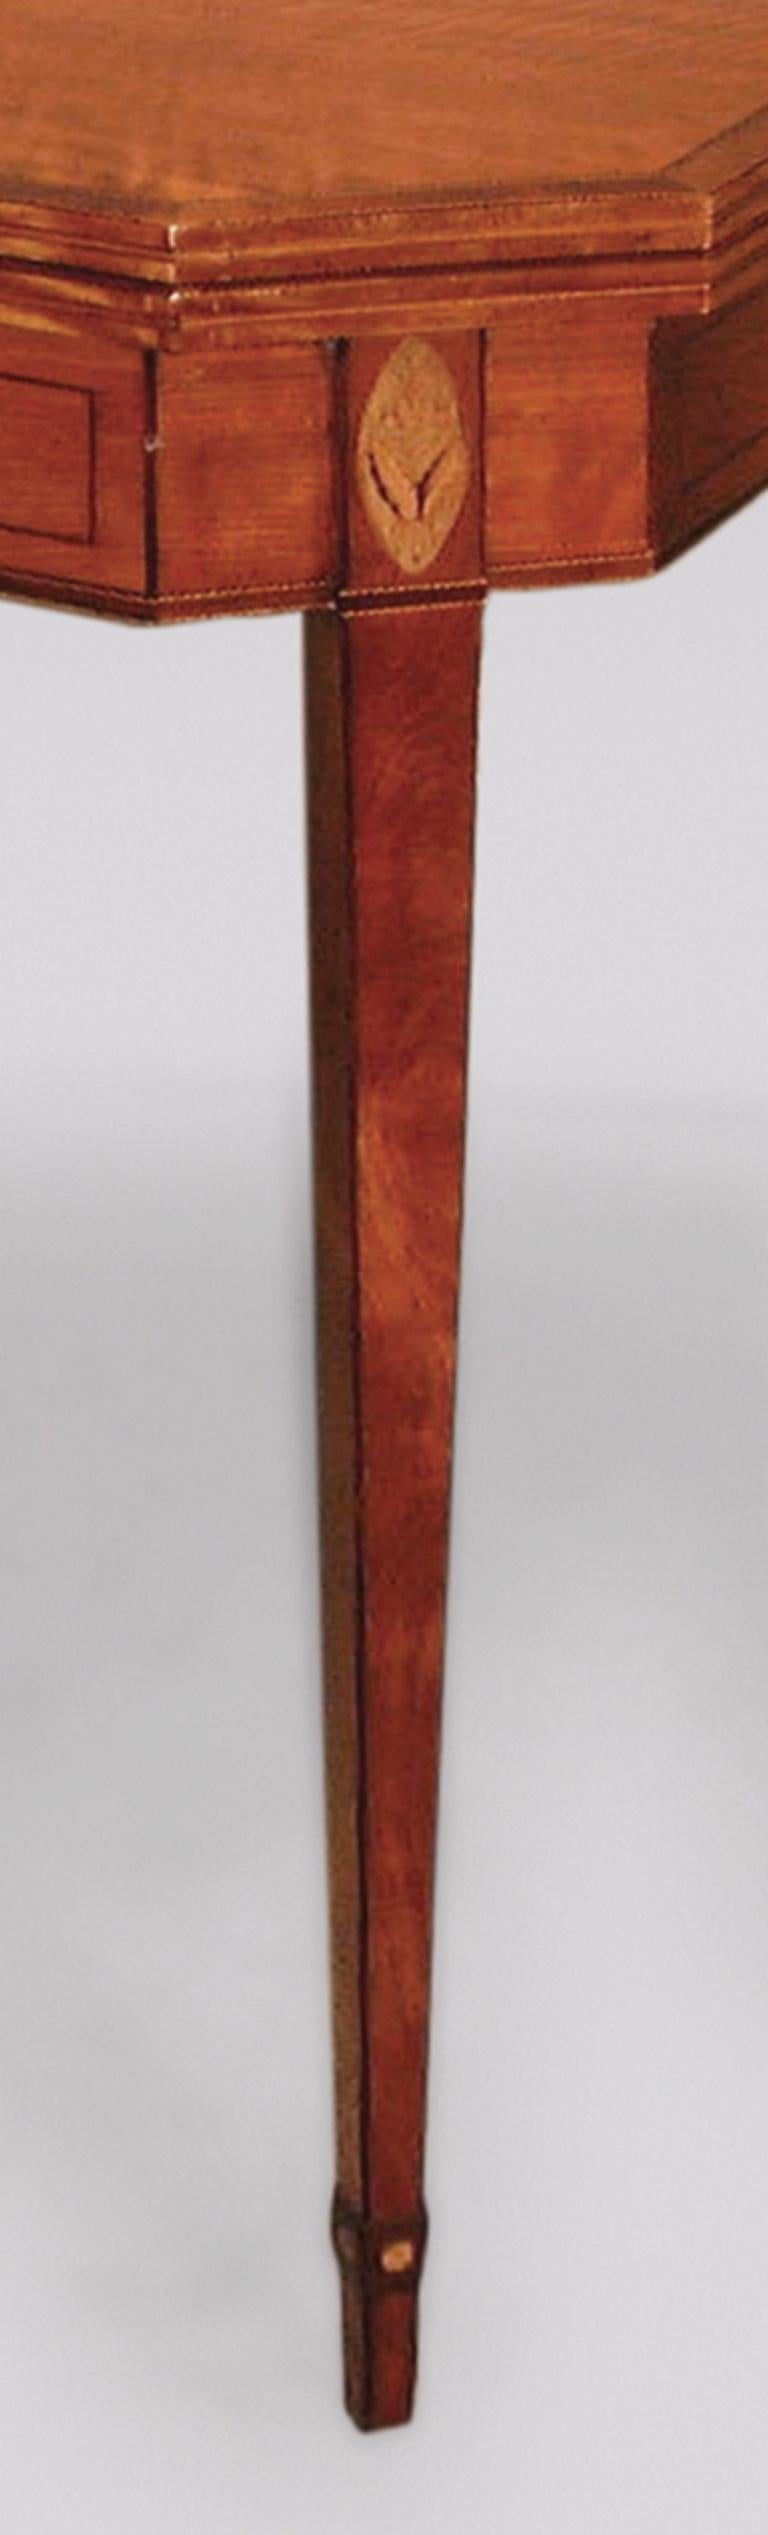 Poli Table à cartes en bois de satin de la fin du 18e siècle, période Sheraton en vente